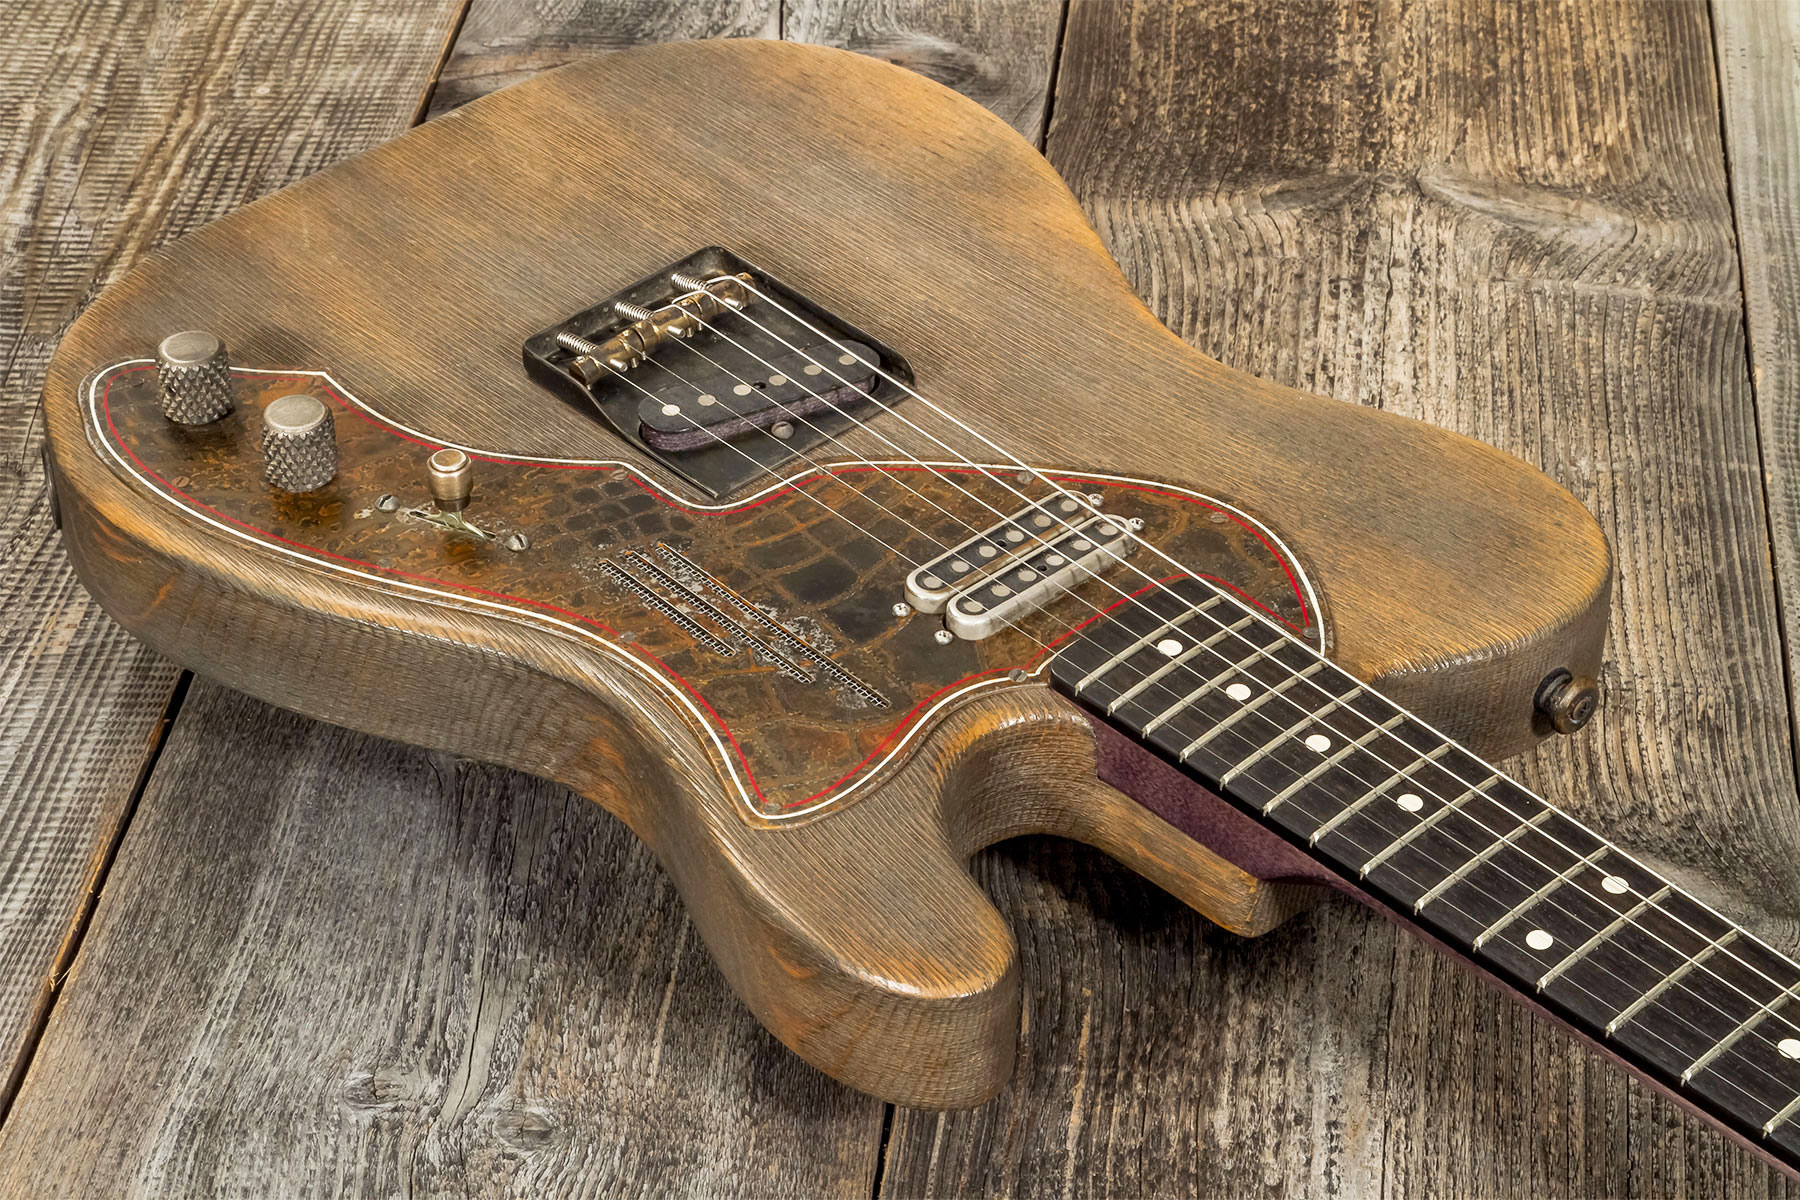 James Trussart Steelguard Caster Sugar Pine Sh Eb #18035 - Rust O Matic Gator Grey Driftwood - Tel shape electric guitar - Variation 2